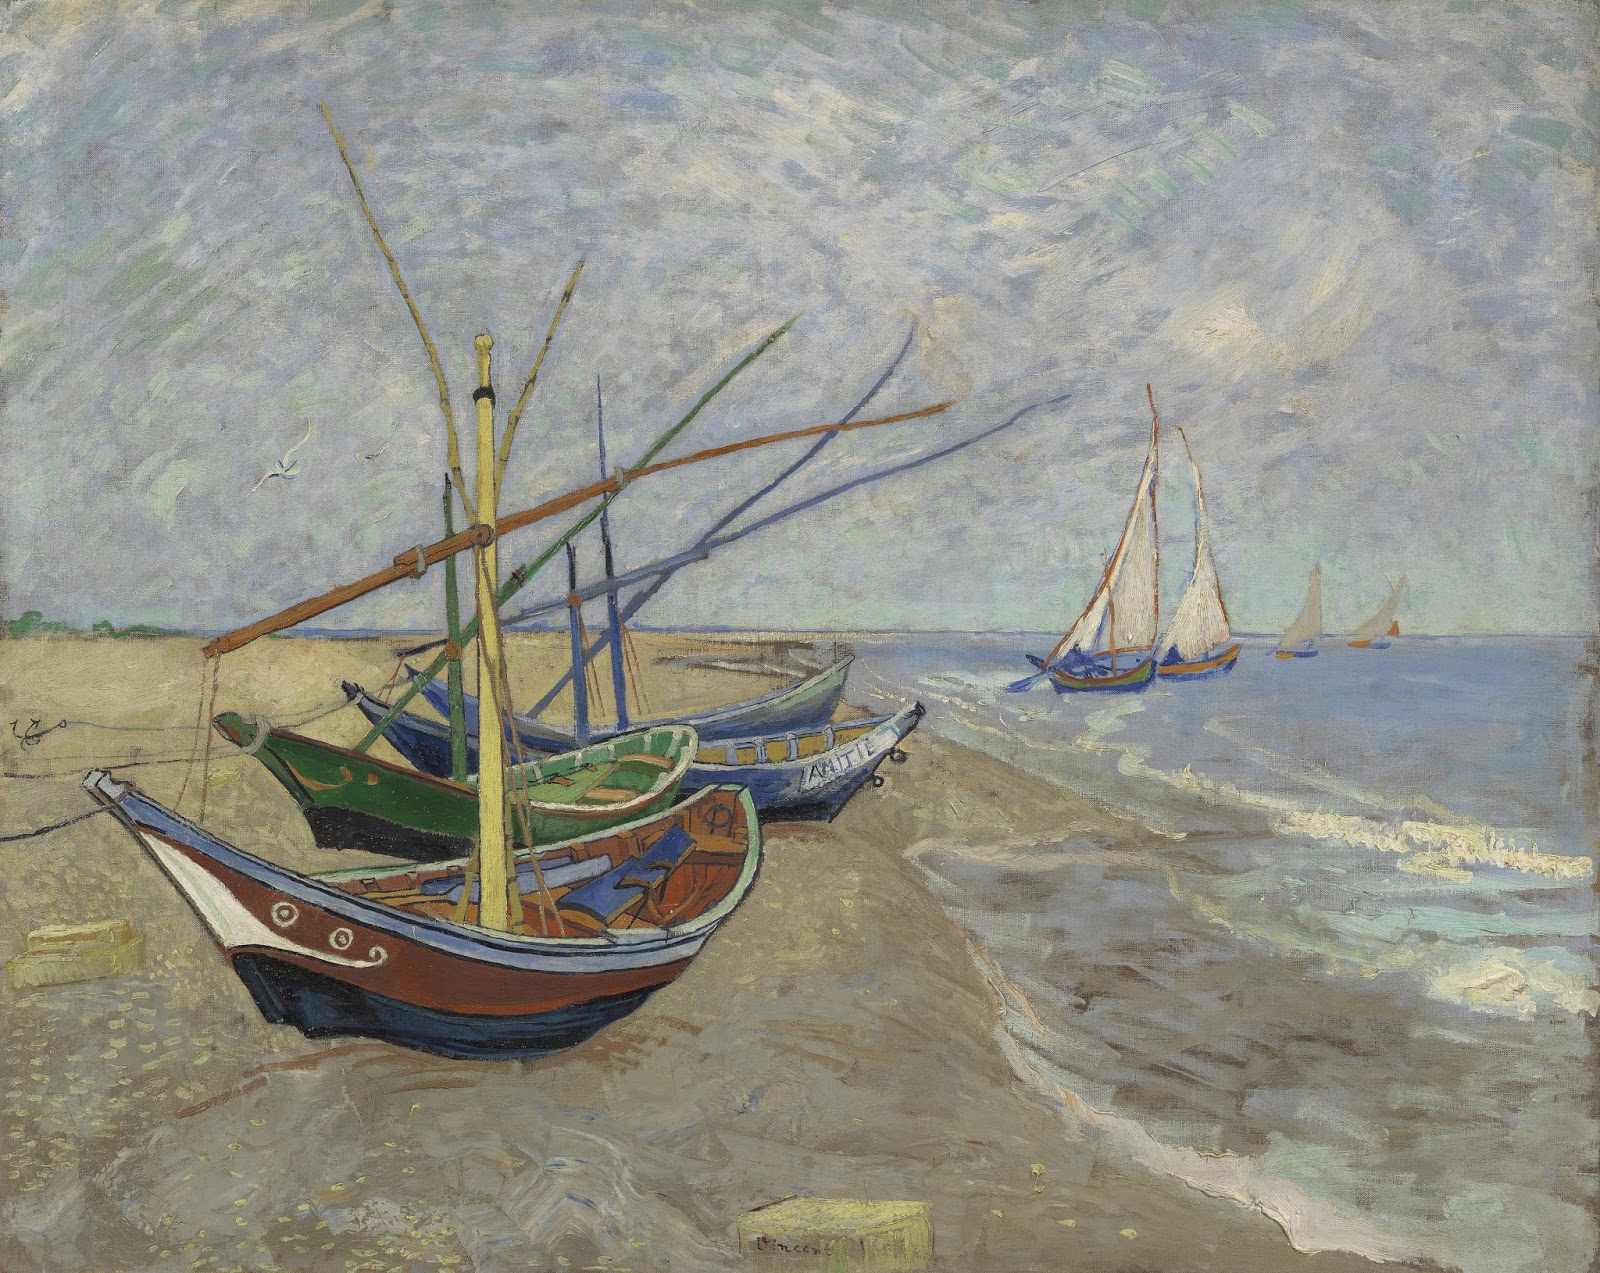 Vincent+Van+Gogh-1853-1890 (338).jpg